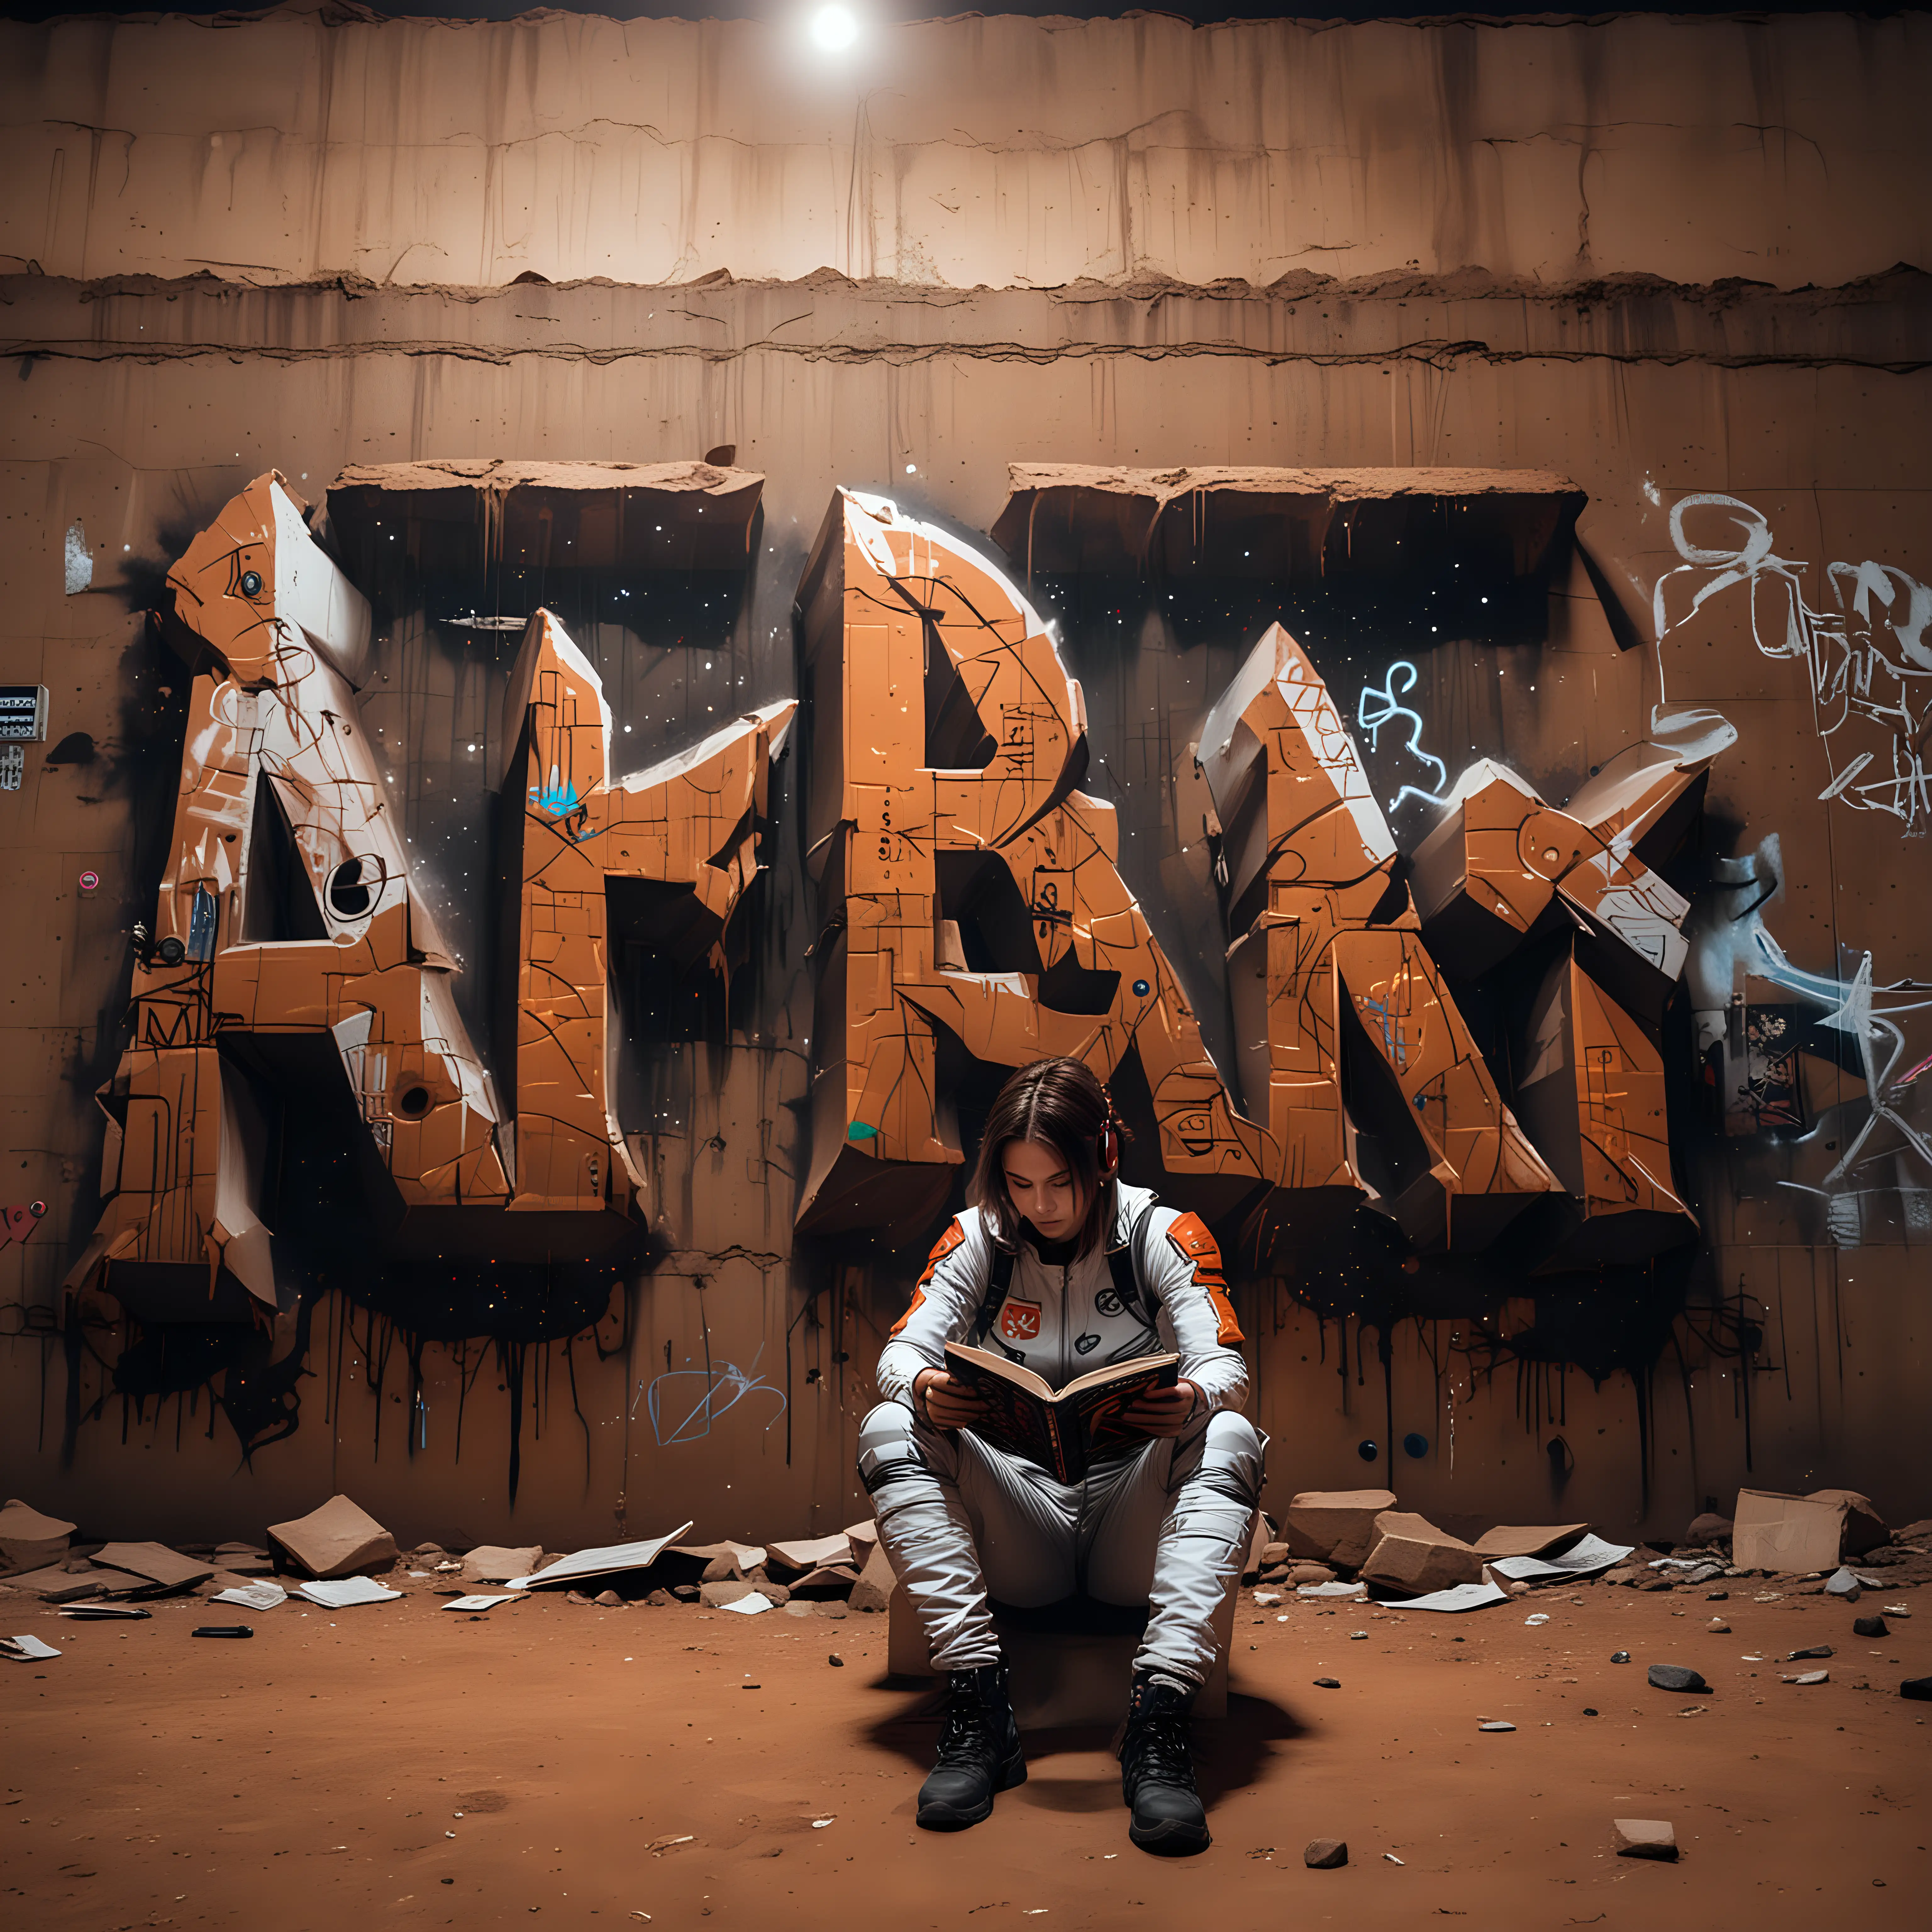 Cyberpunk Girl Reading Book by Graffiti Wall on Mars at Night